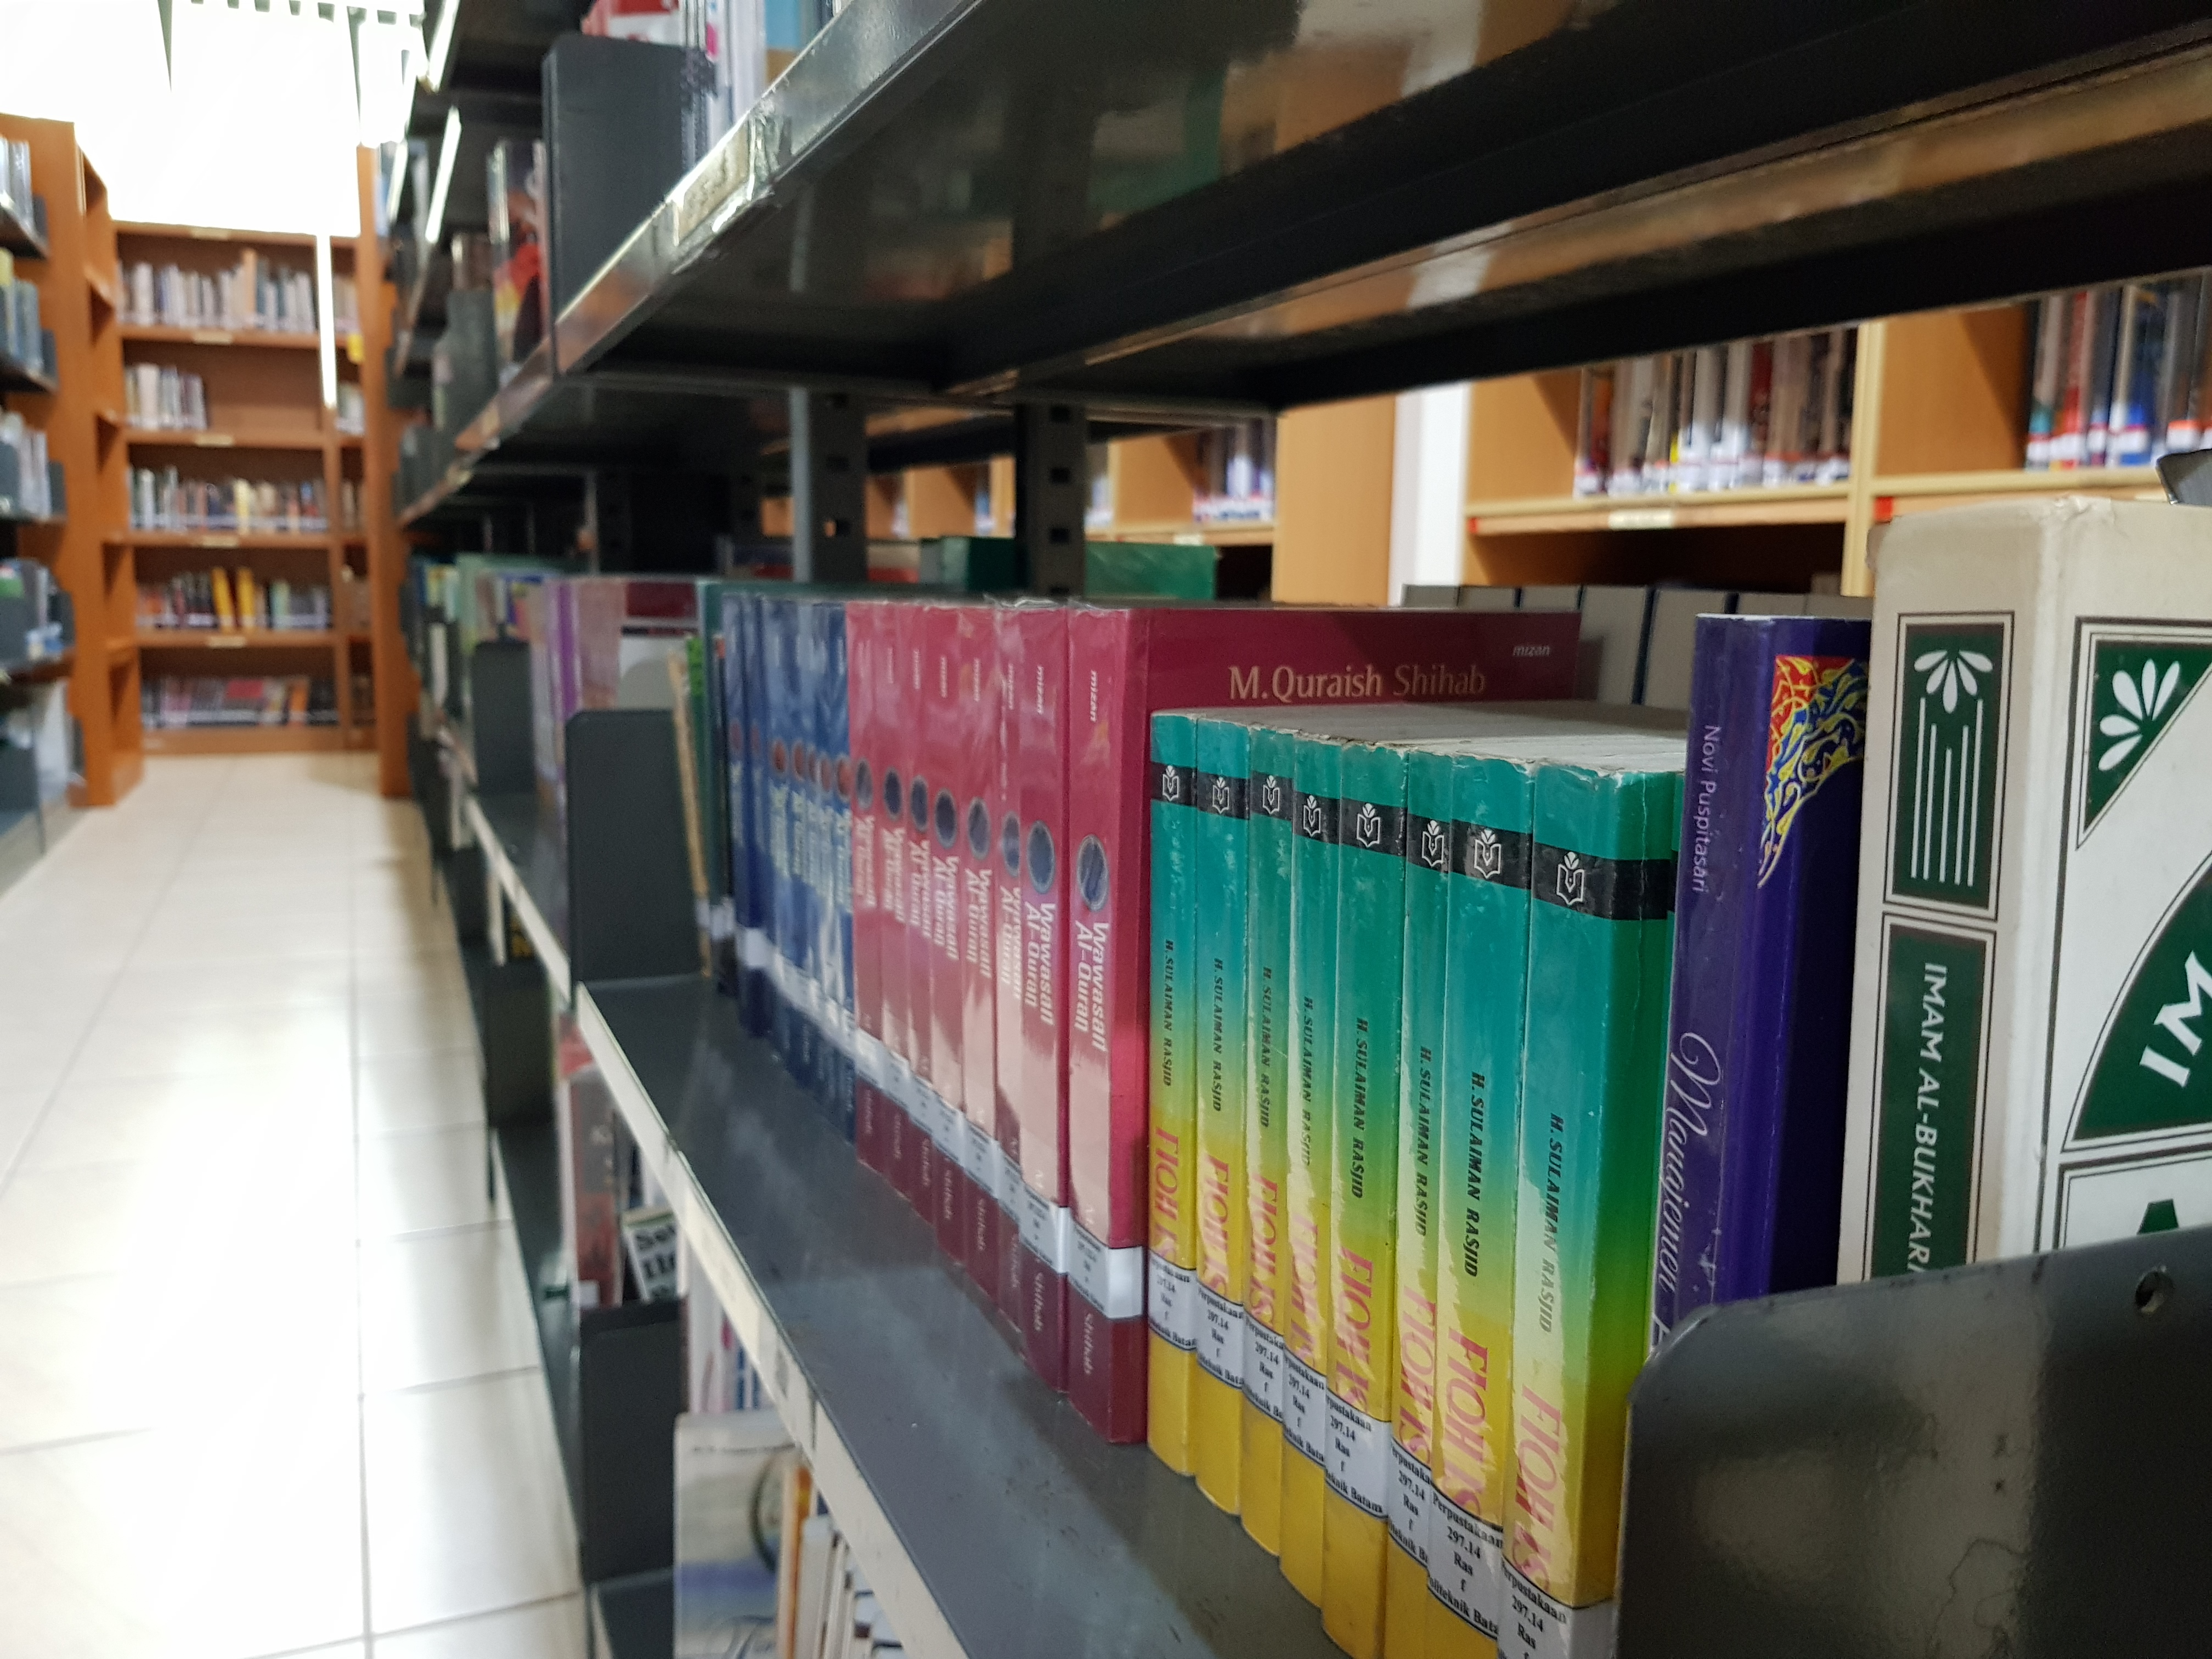 Perpustakaan Politeknik Negeri Batam